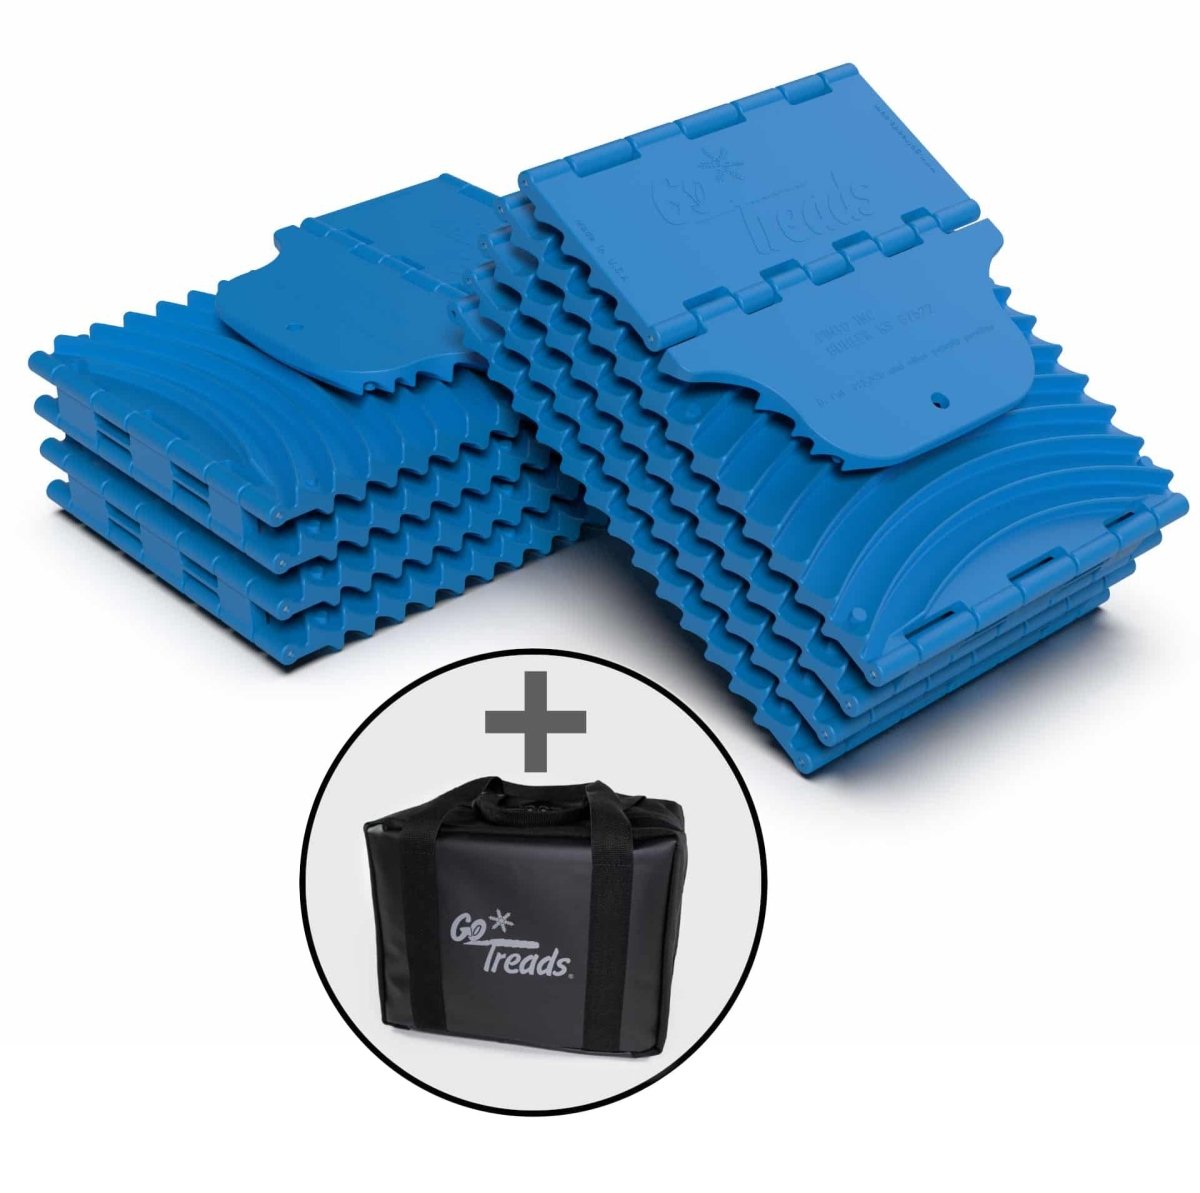 GoTreads XL Folding Recovery Boards Blue - (1x Pair) in Storage Bag | GoTreads | A247 Gear